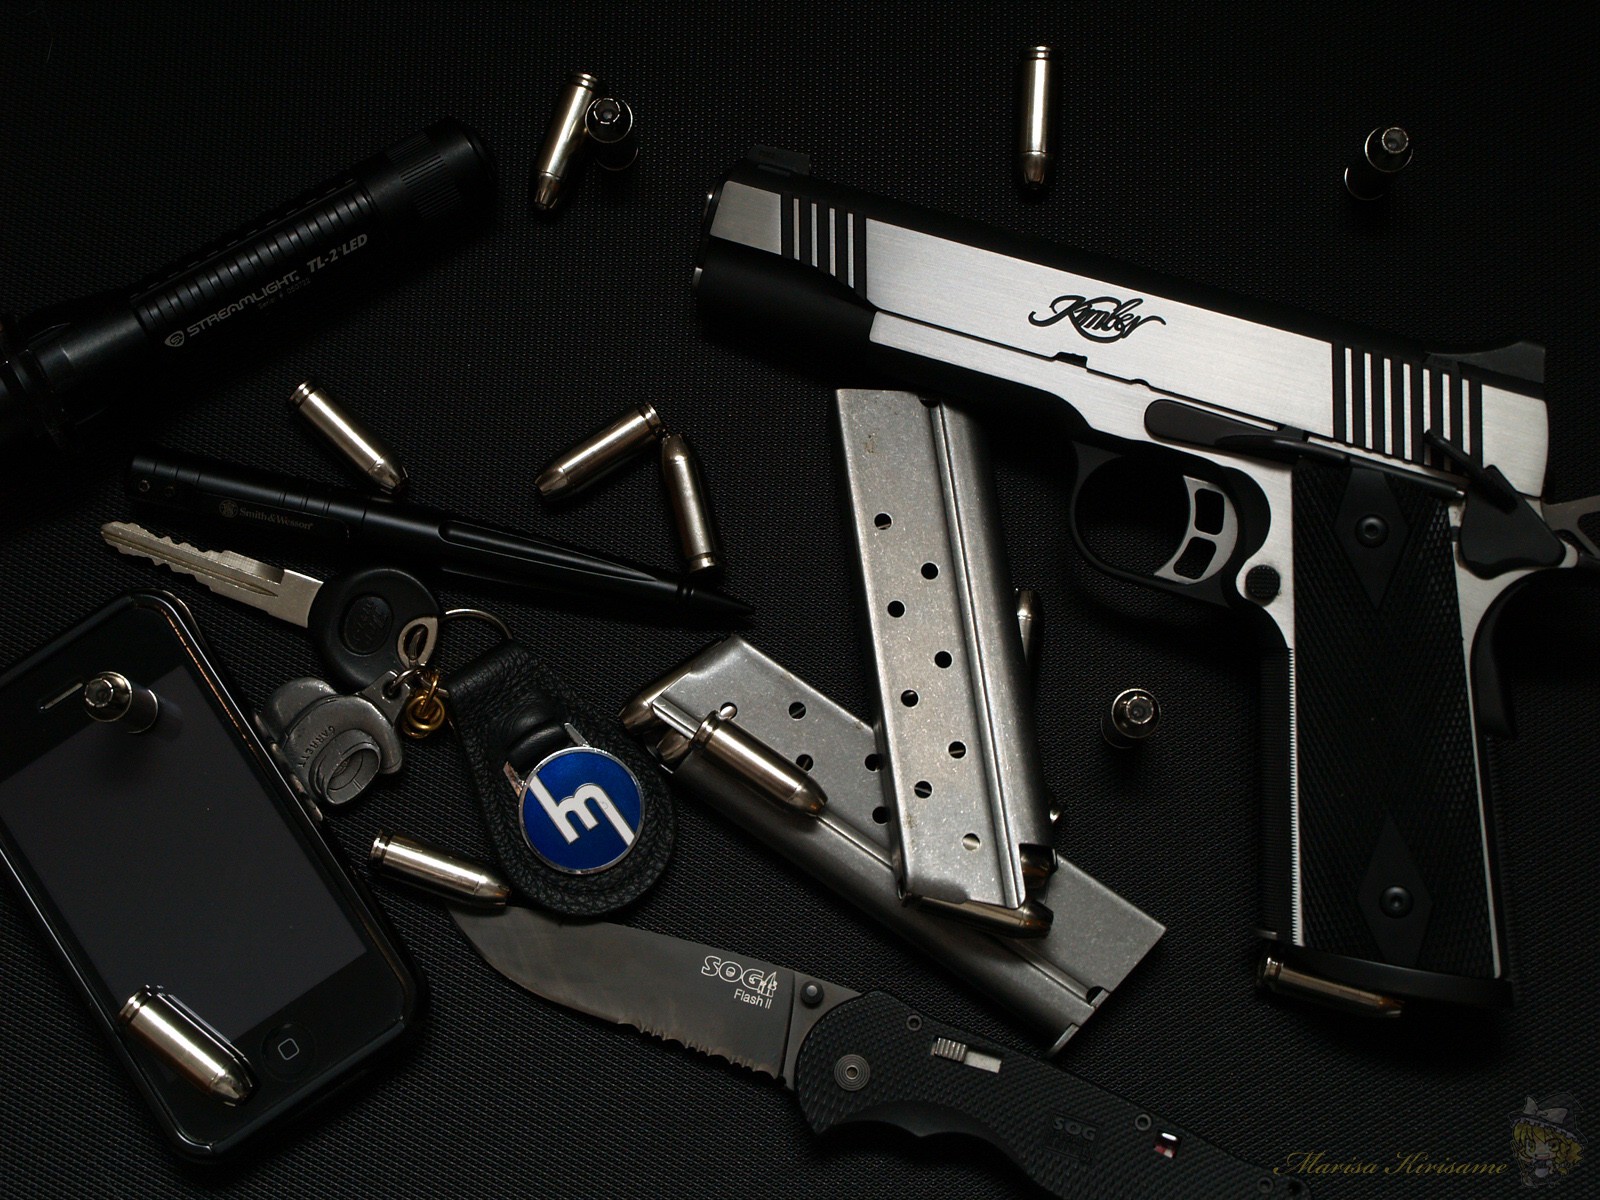 General 1600x1200 knife gun keys ammunition weapon cellphone American firearms